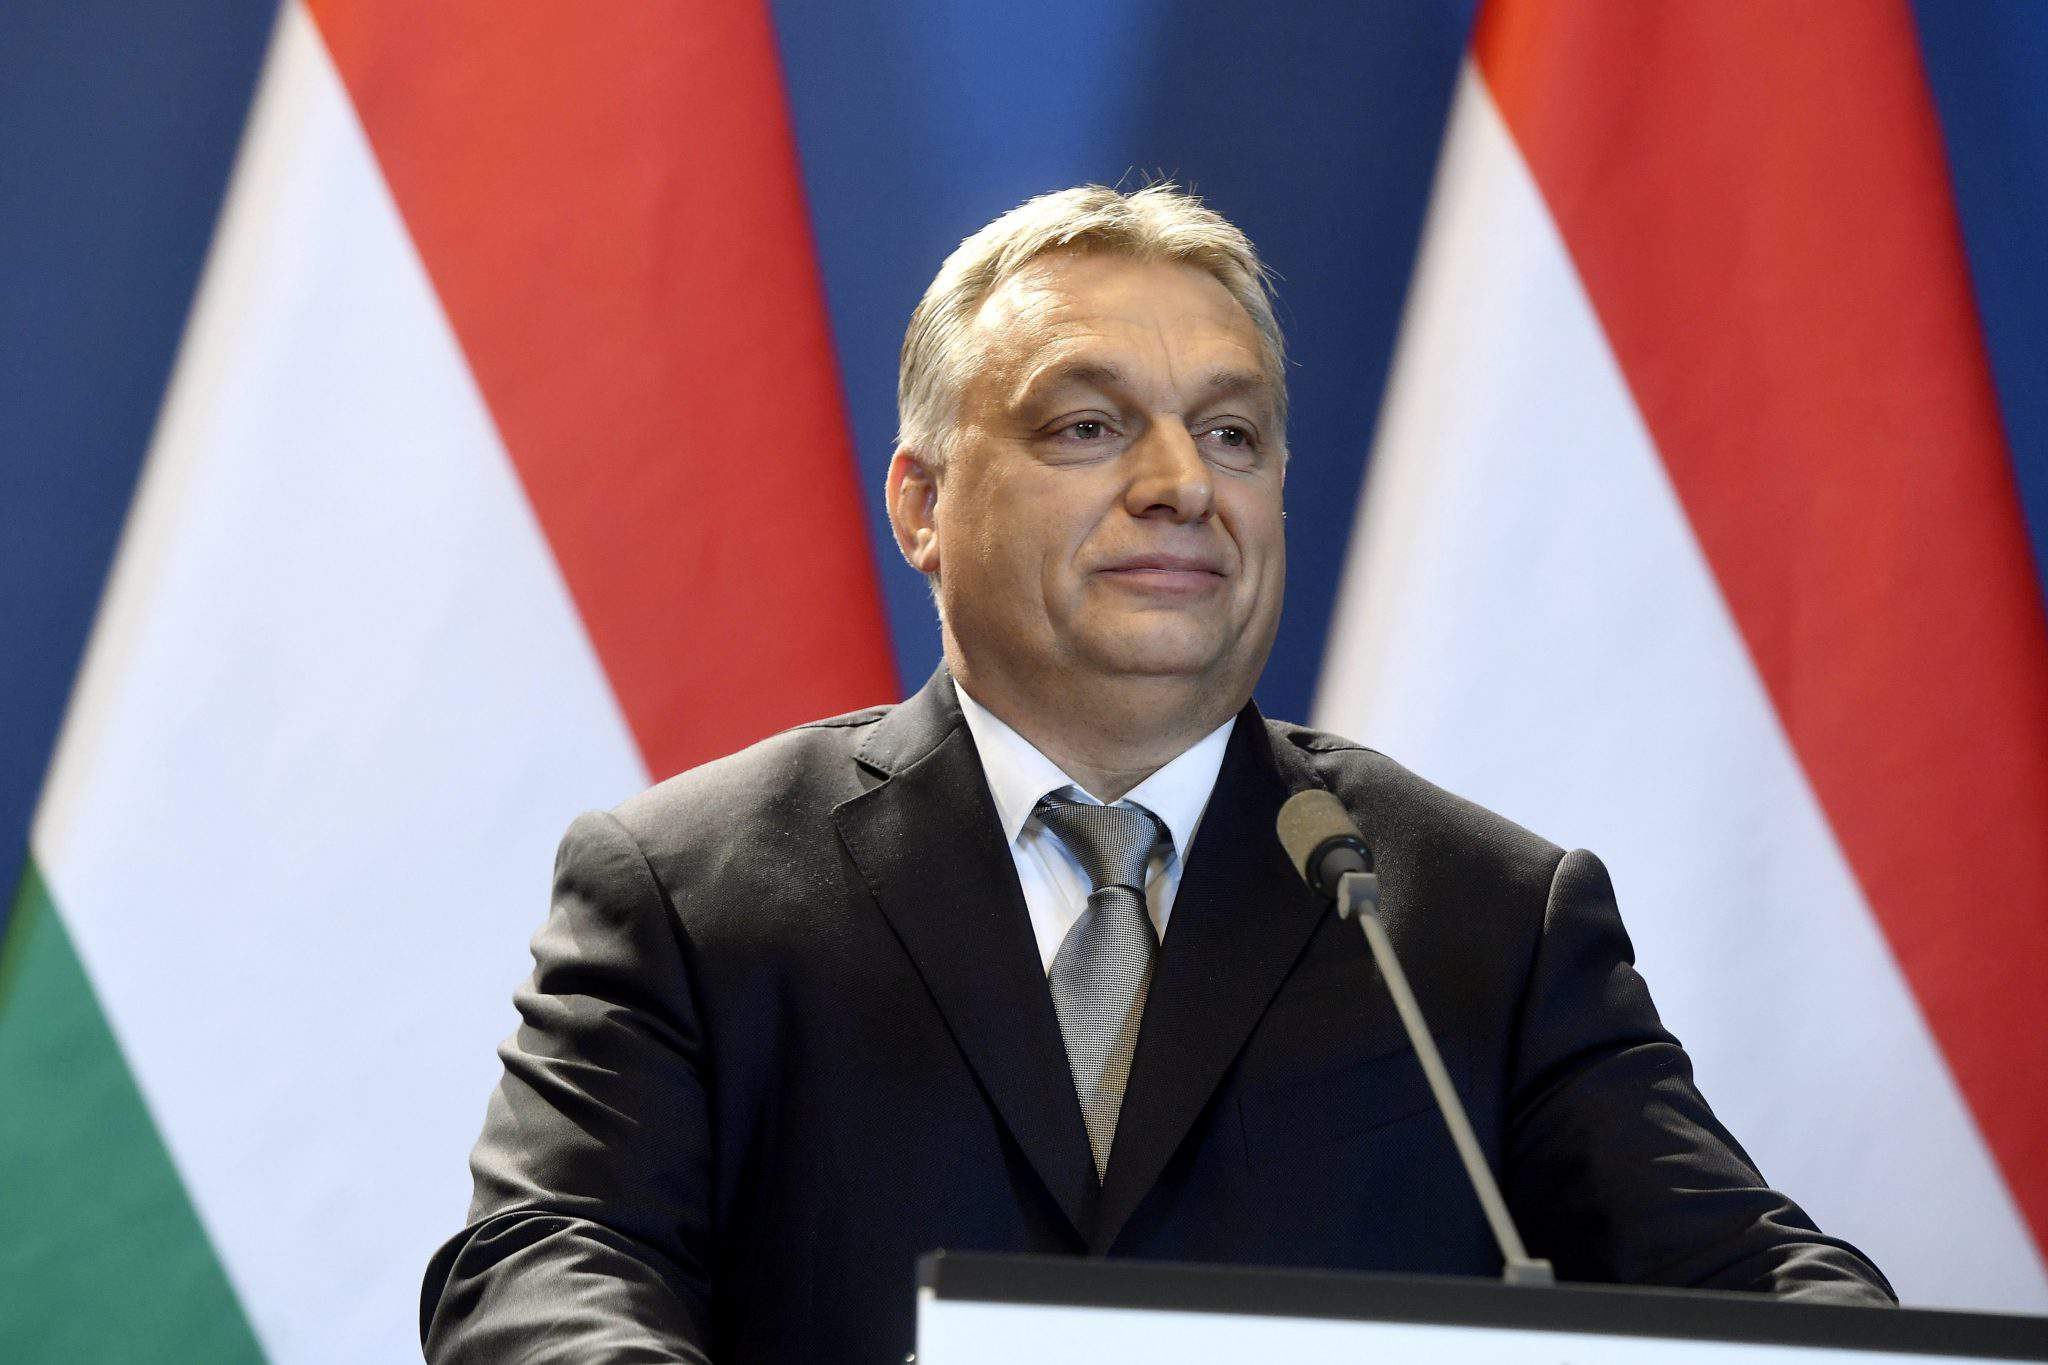 Fidesz's victory might threaten Hungarian democracy